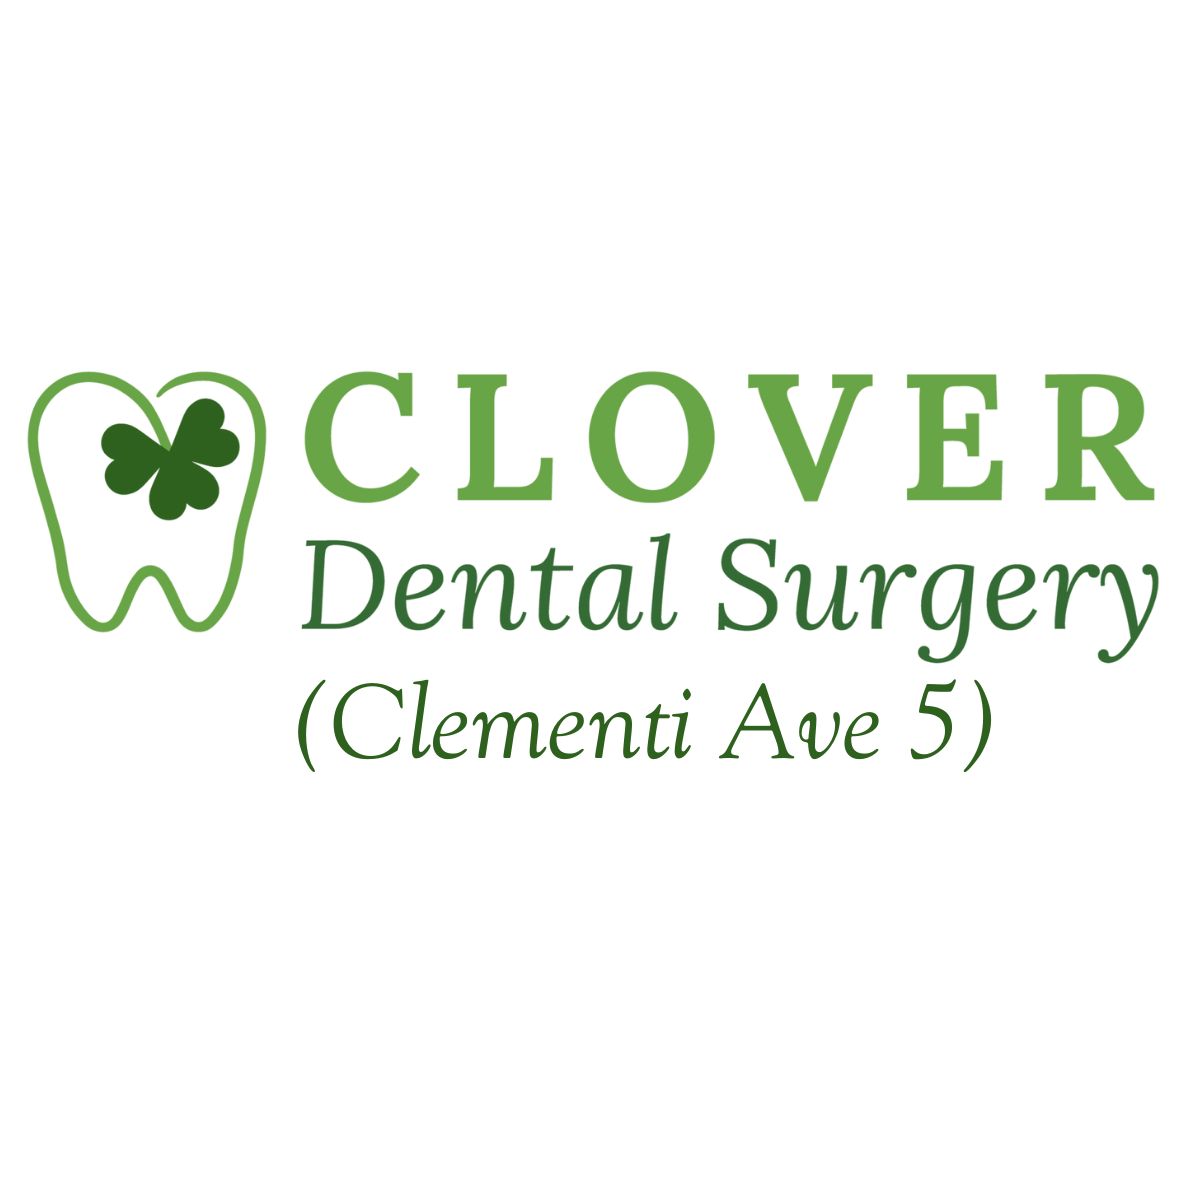 Company logo for Clover Dental (clementi Ave 5) Pte. Ltd.